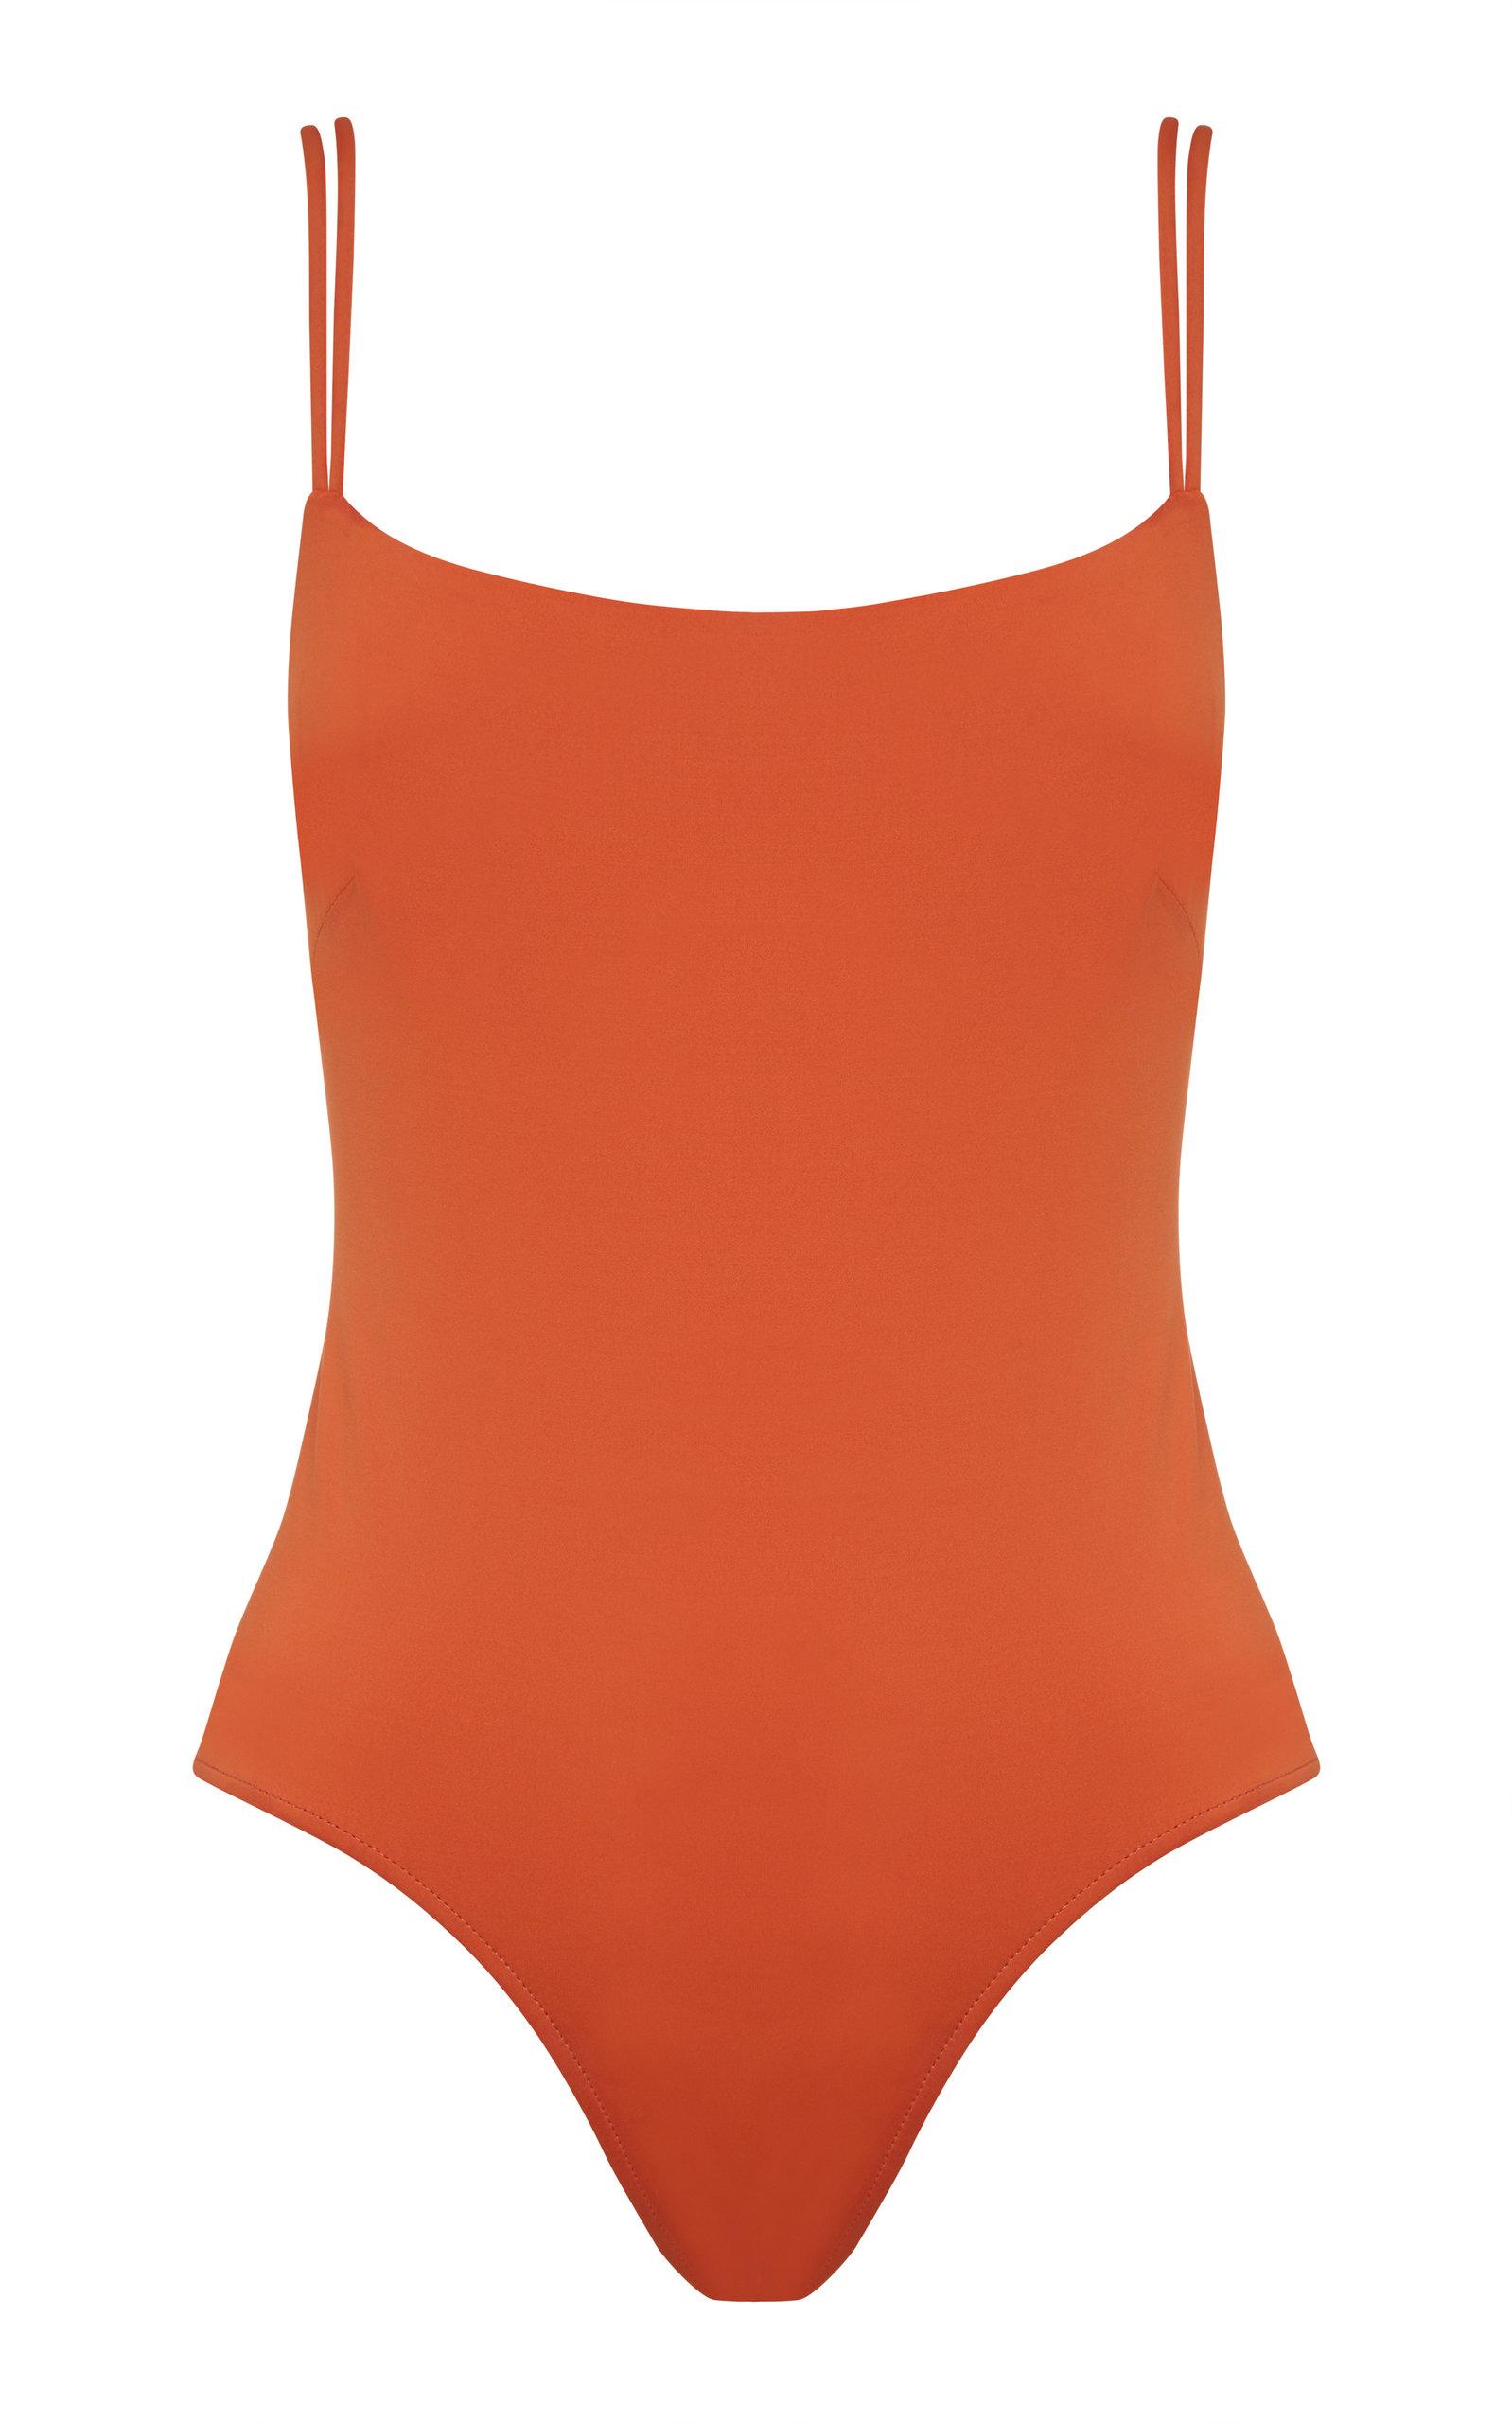 Bondi Born Synthetic Sadie One-piece Swimsuit in Orange - Lyst